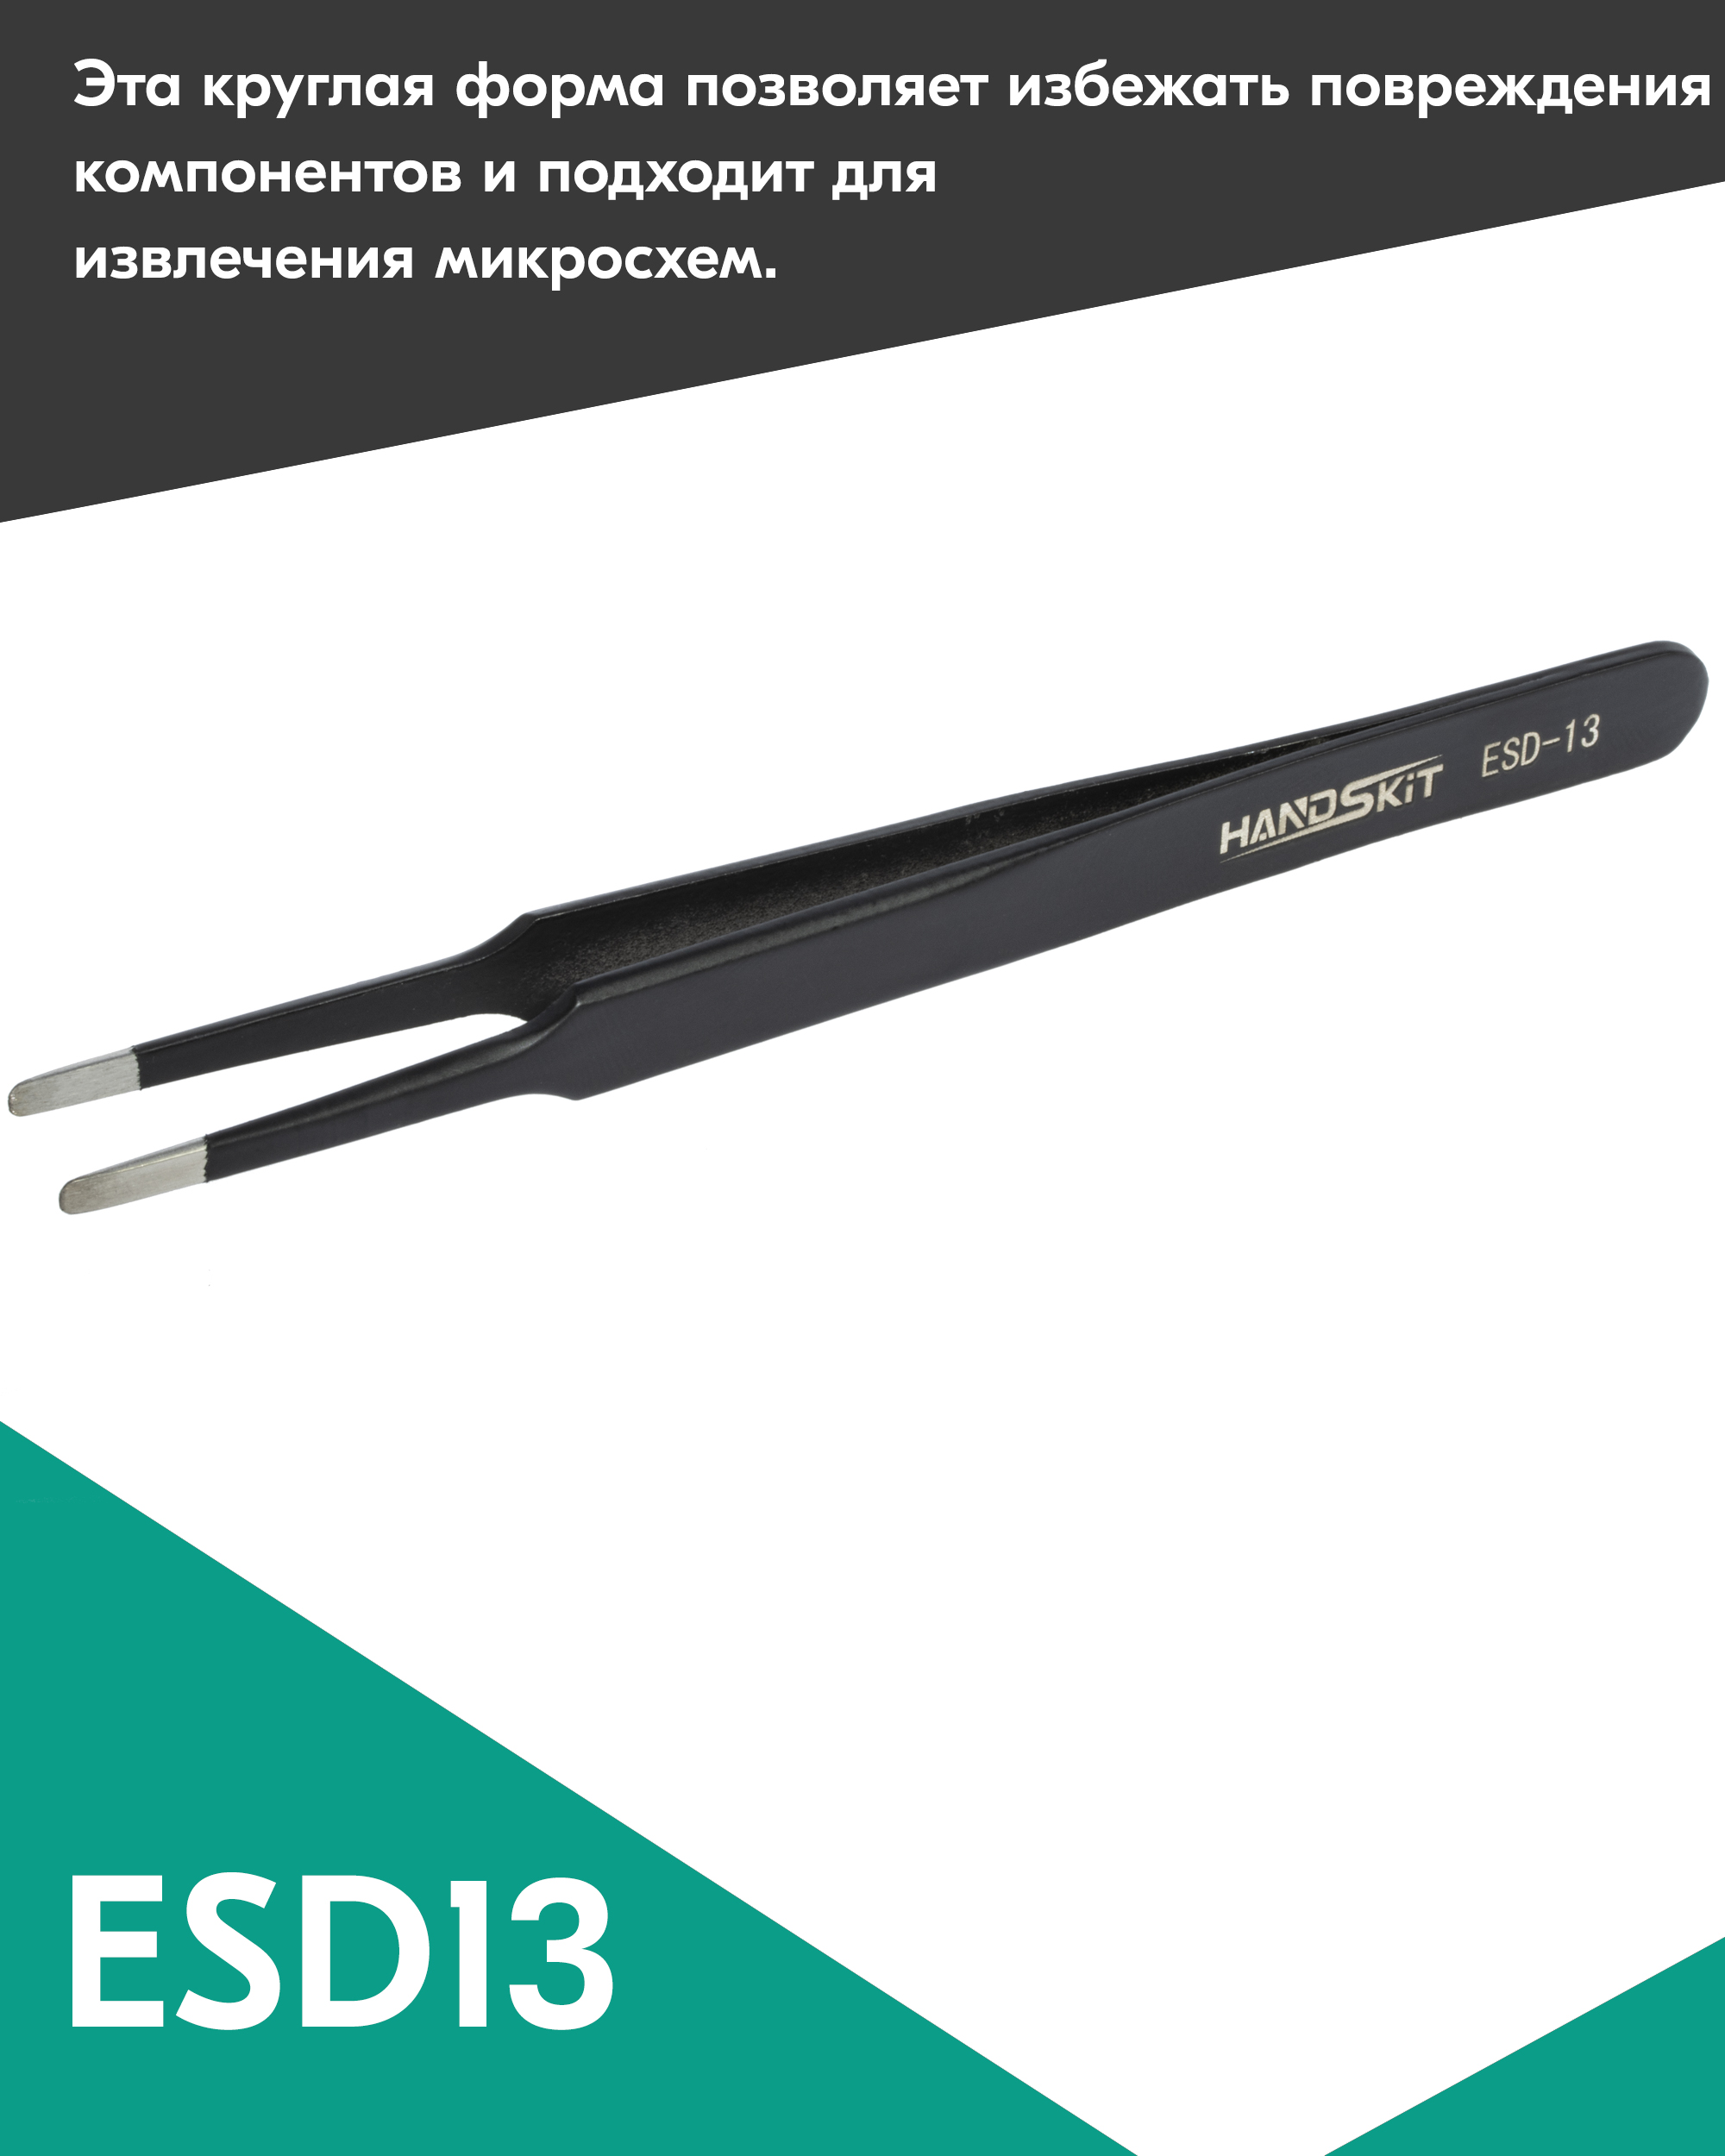 Пинцет диэлектрический HANDSKIT ESD13 (120 мм) пинцет для занятий по методике монтессори